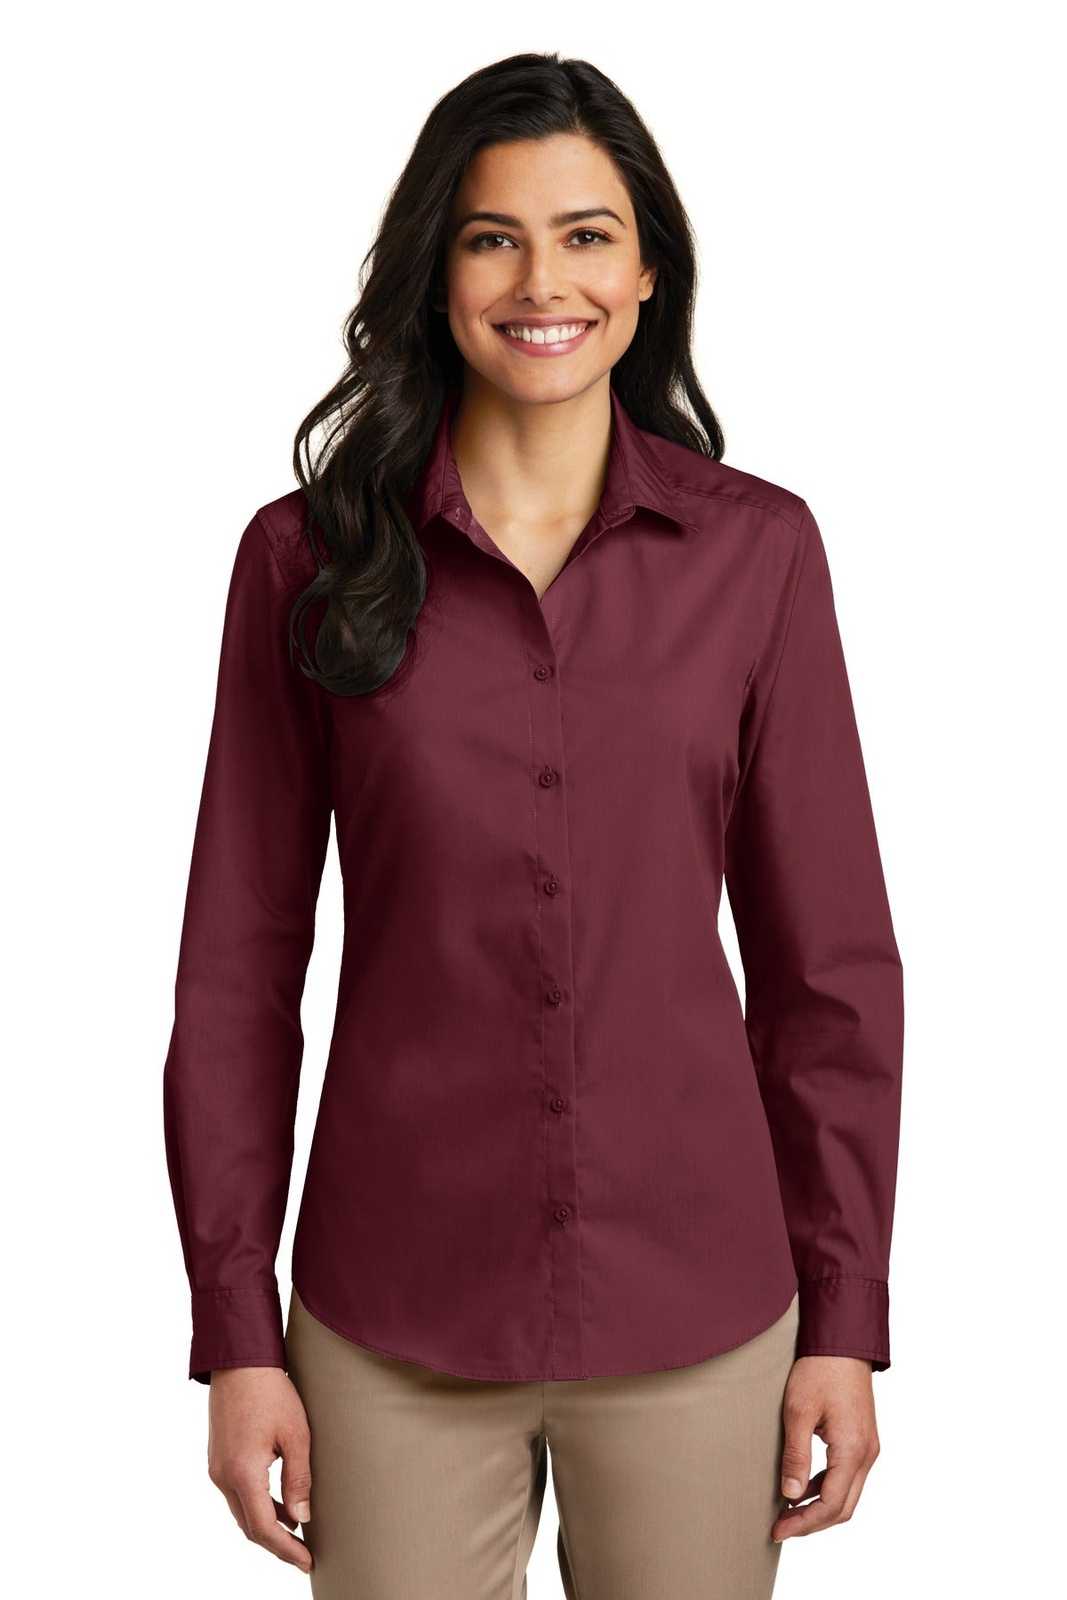 Port Authority LW100 Ladies Long Sleeve Carefree Poplin Shirt - Burgundy - HIT a Double - 1